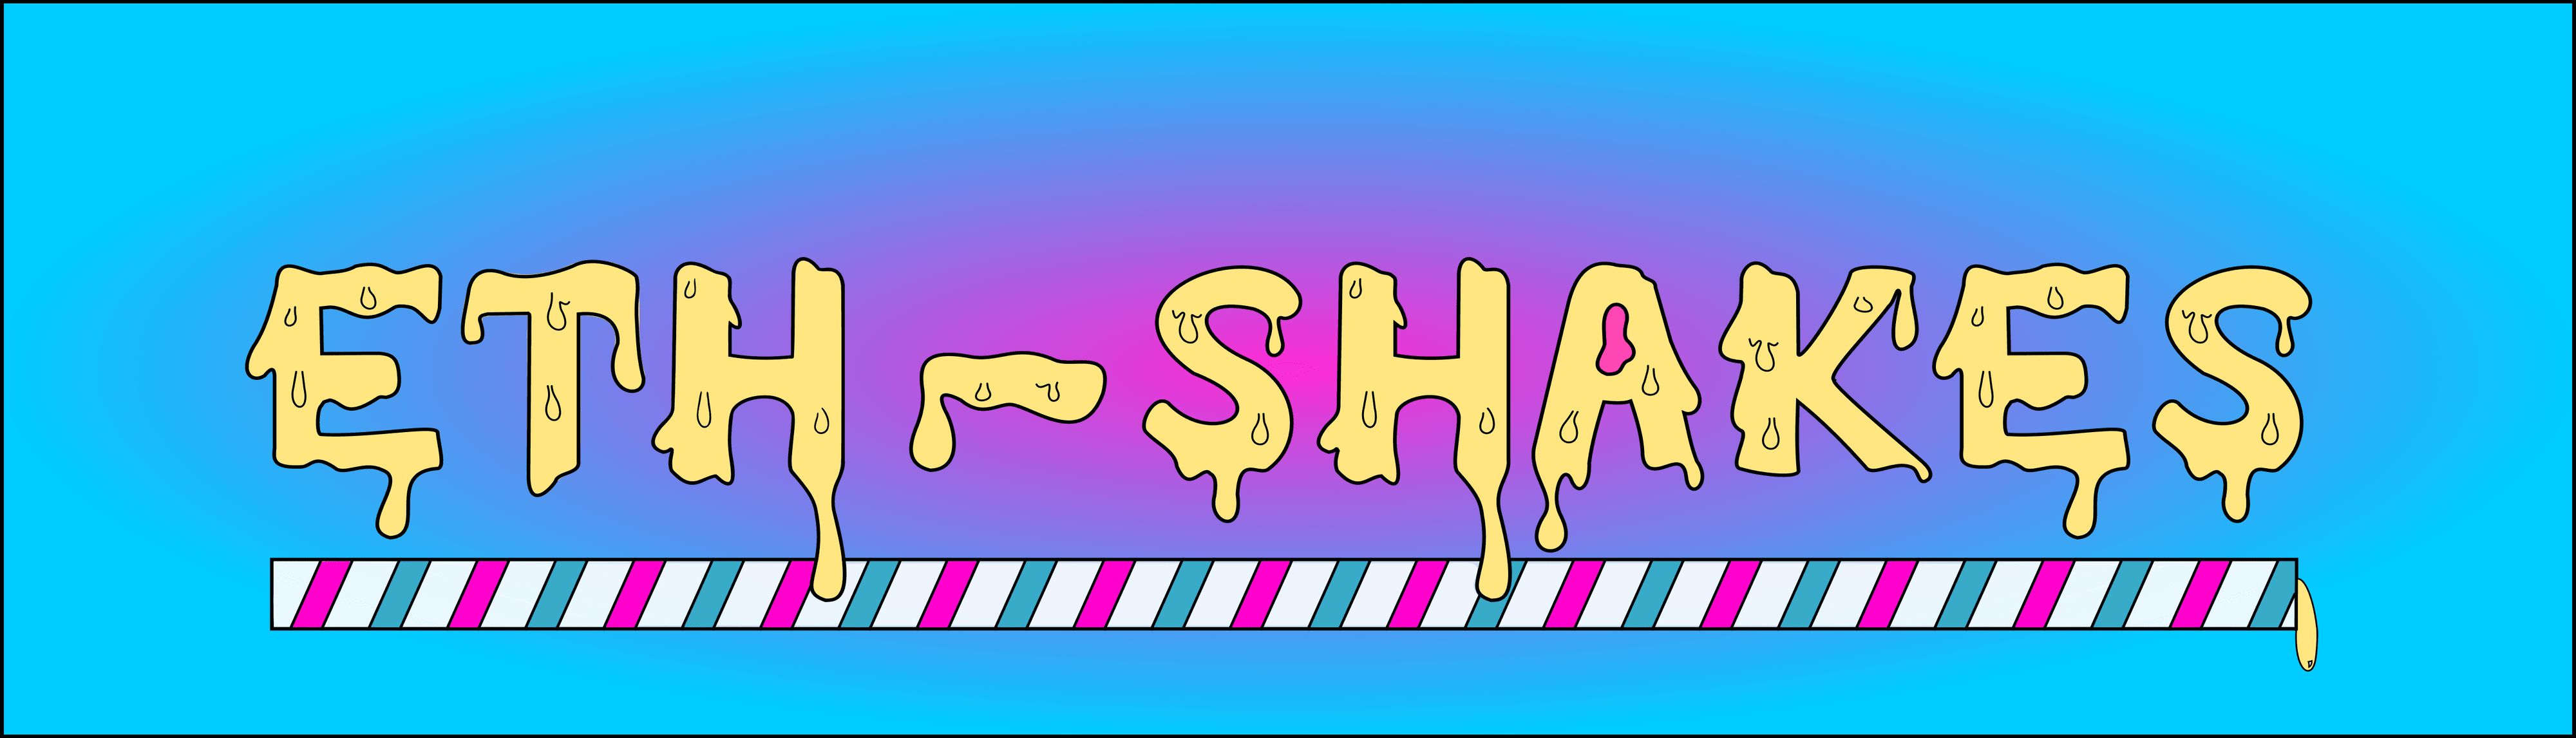 eth-shakes banner